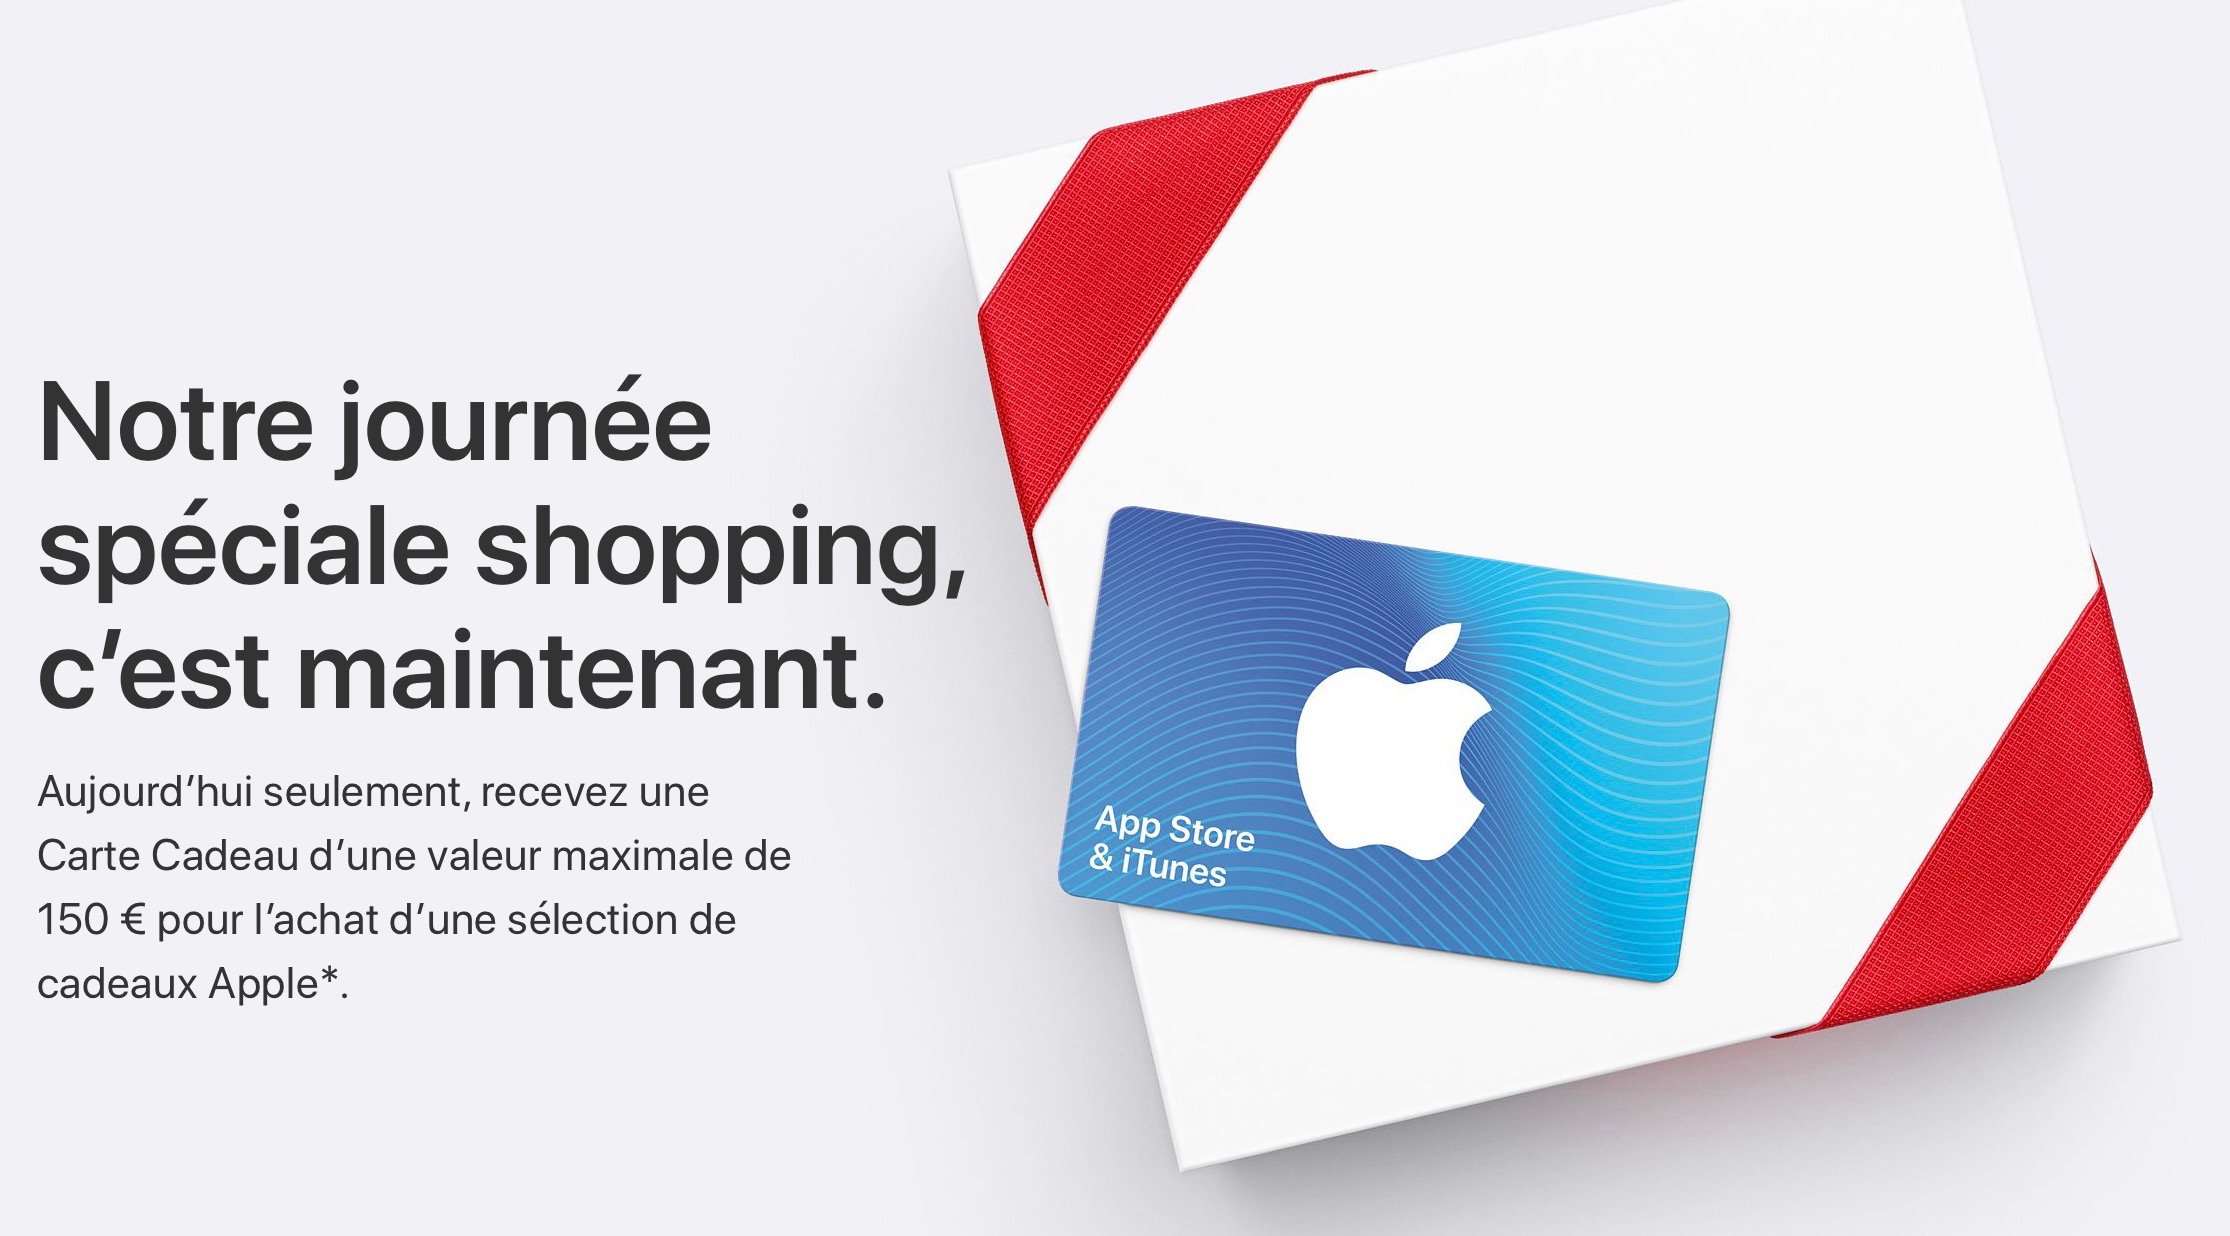 Apple carte cadeau 25 euros